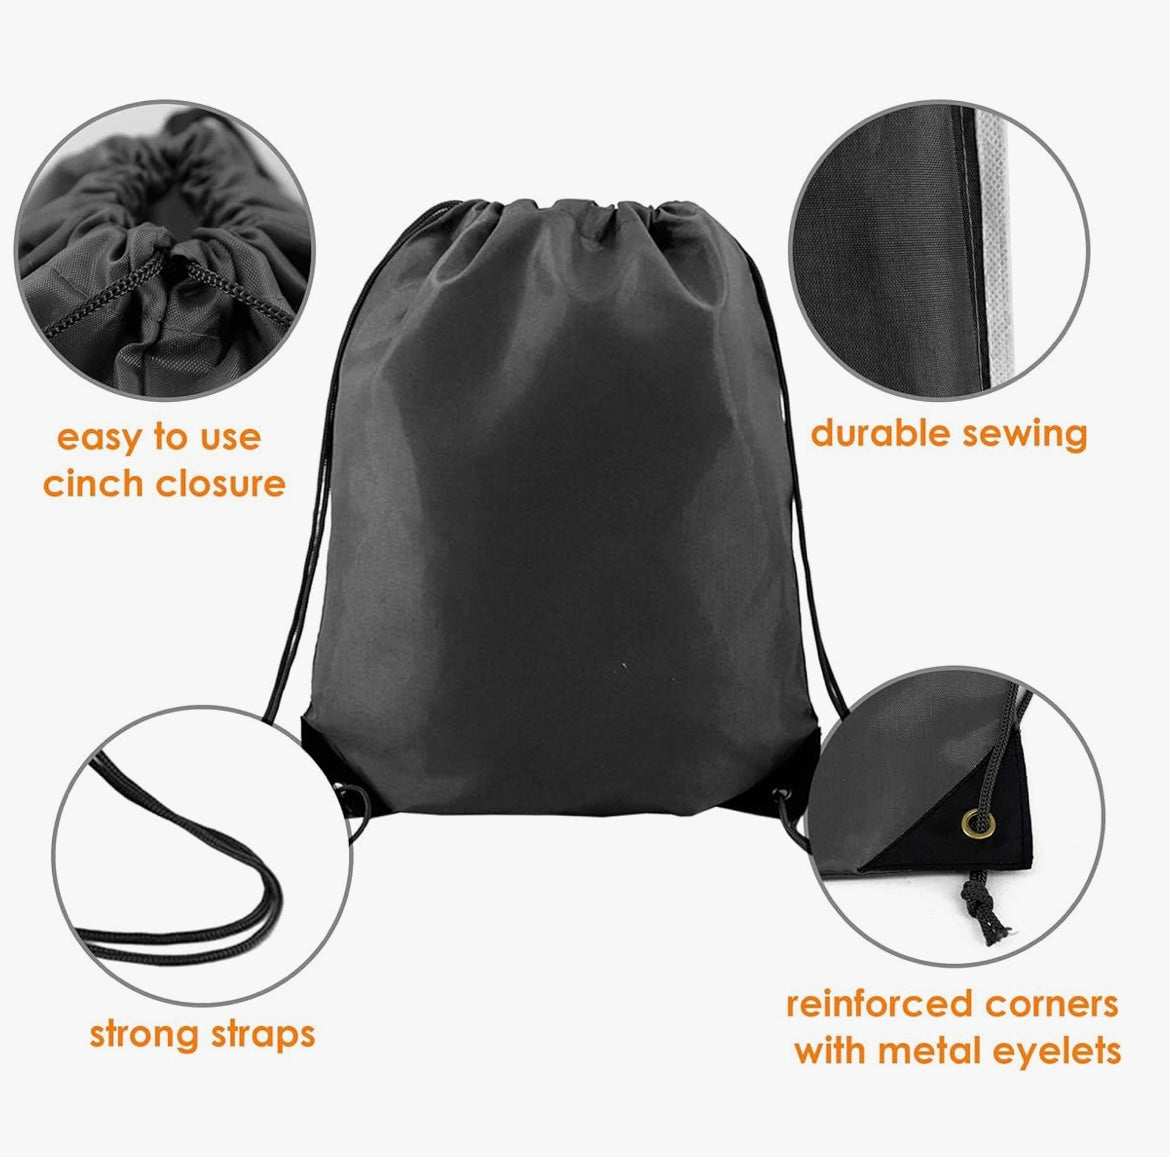 Eat, Sleep, Basketball, Repeat Motivational alongside a spirited basketball graphic Dynamic drawstring bag